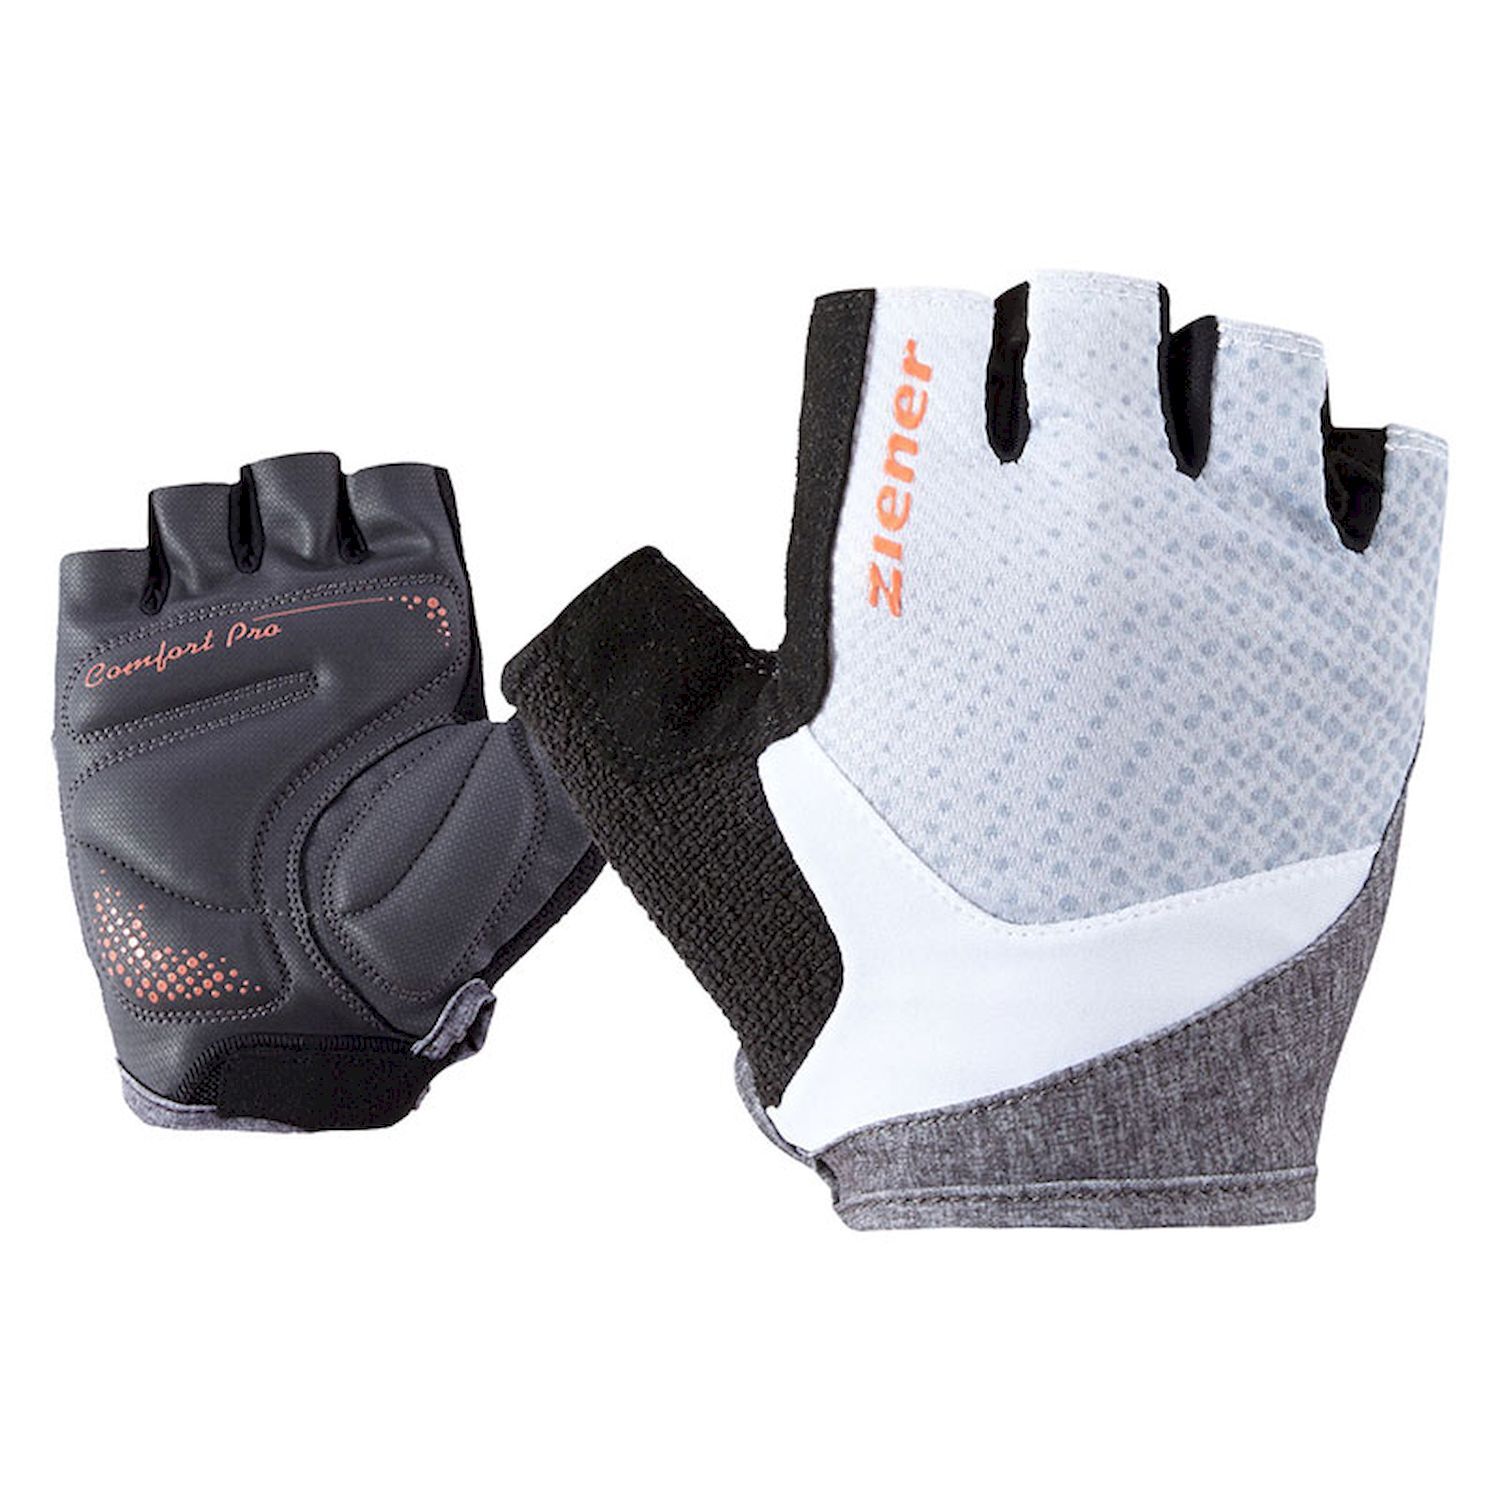 Ziener Cendal Lady - Cycling gloves - Women's